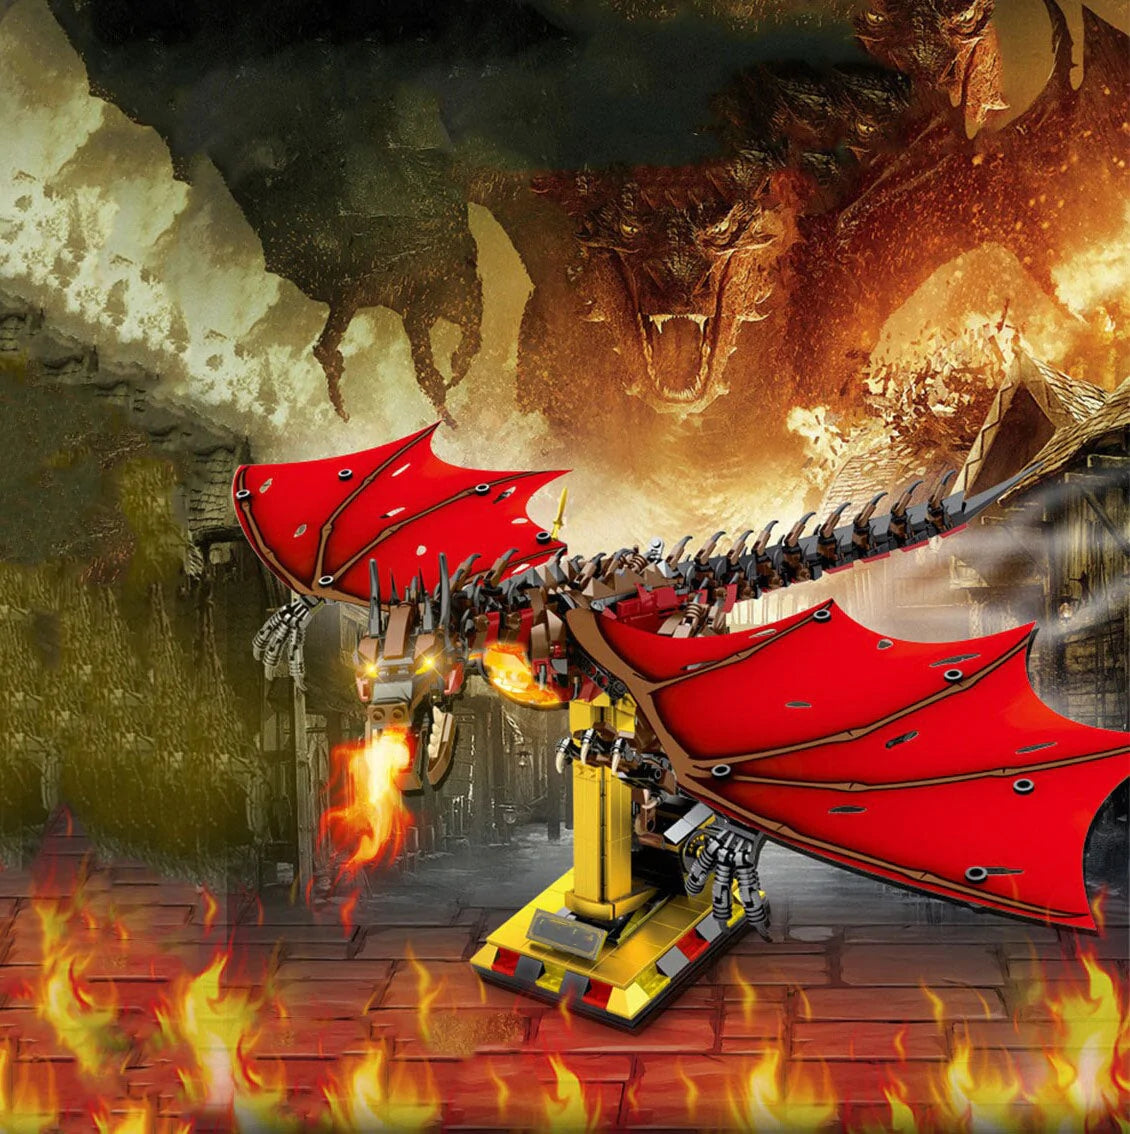 The Final Battle of Destructive Dragons Building Blocks  | New